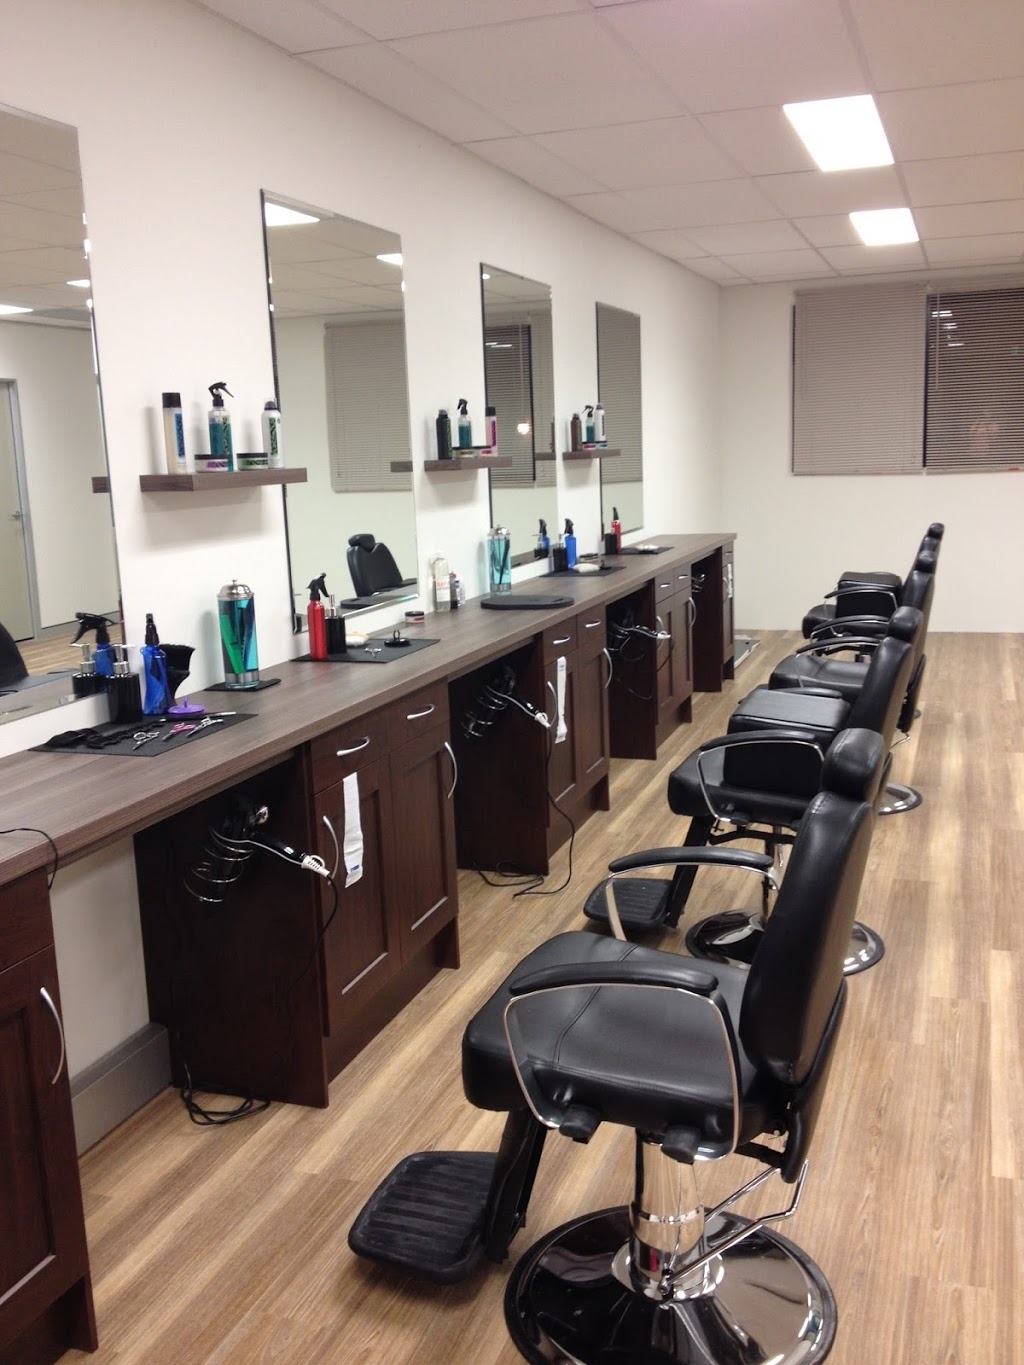 Celtic Cuts | hair care | 691 Albany Creek Rd, Albany Creek QLD 4035, Australia | 0434433977 OR +61 434 433 977